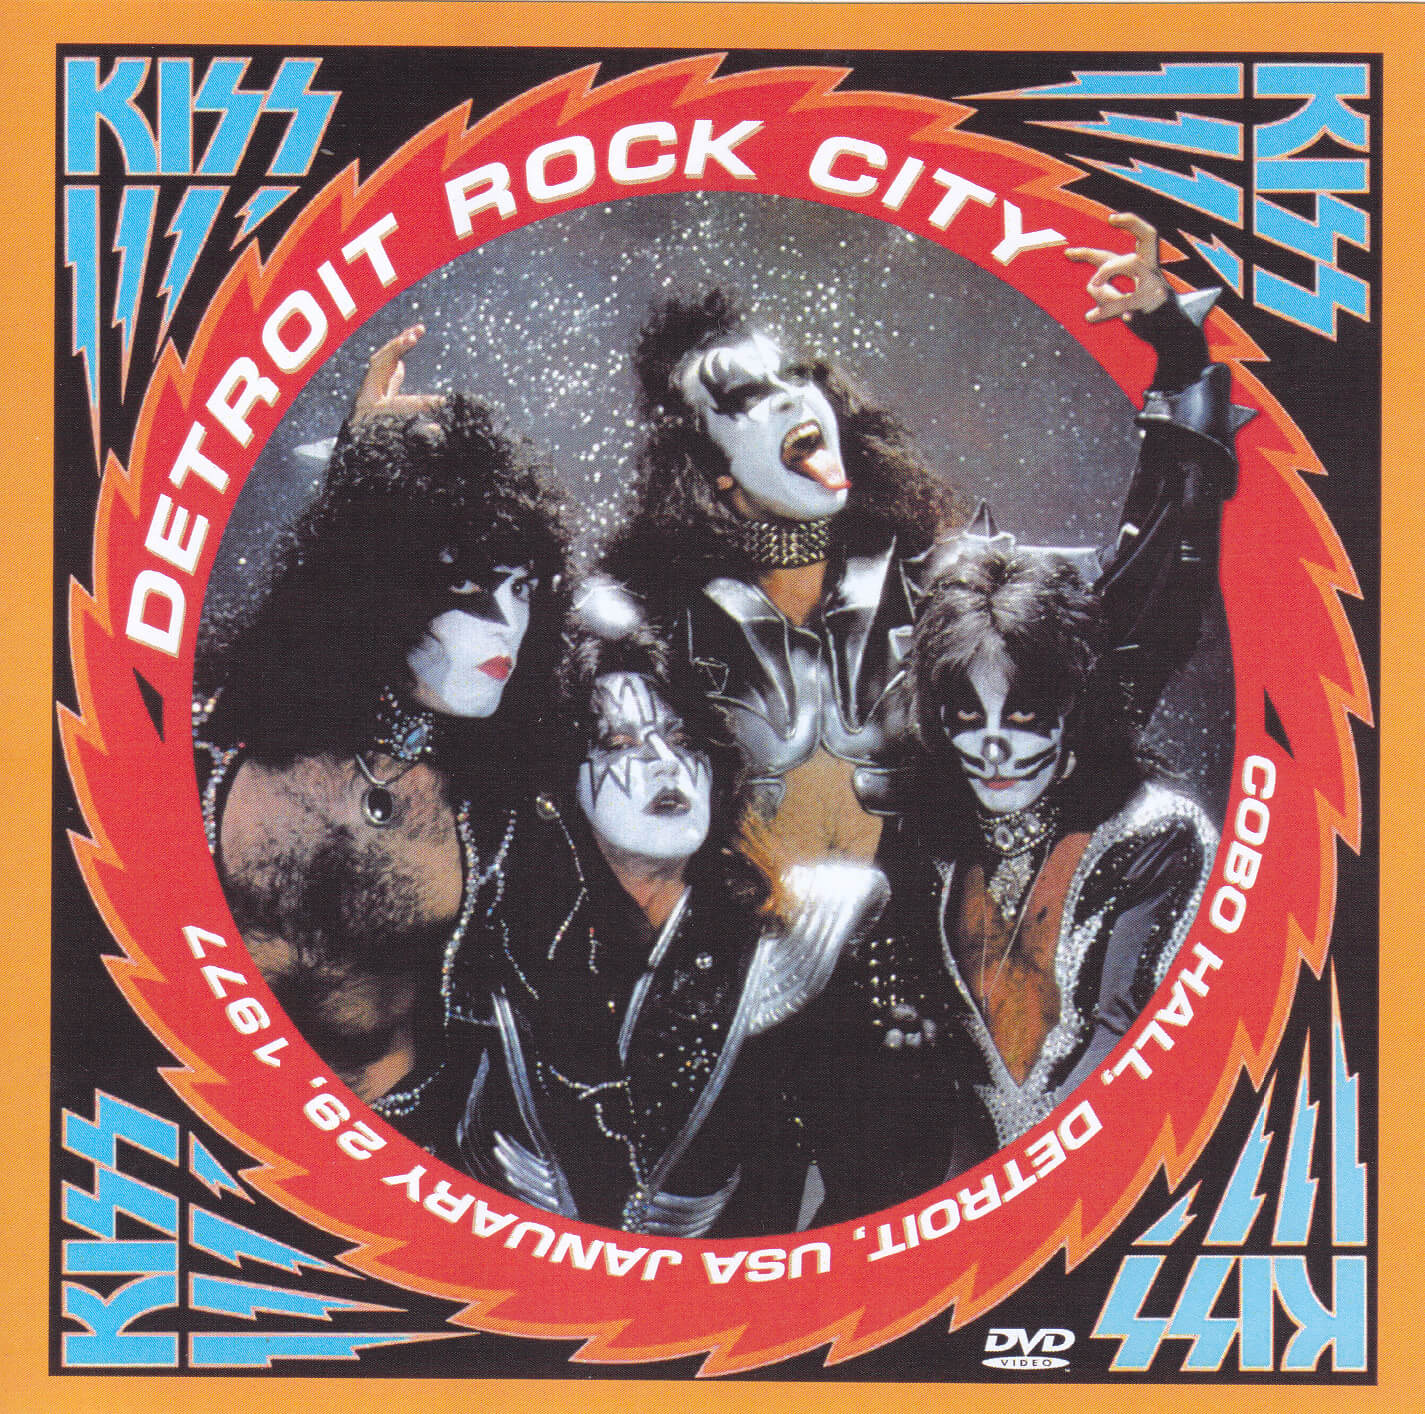 Dvd Kiss Detroit Rock City - Legendado